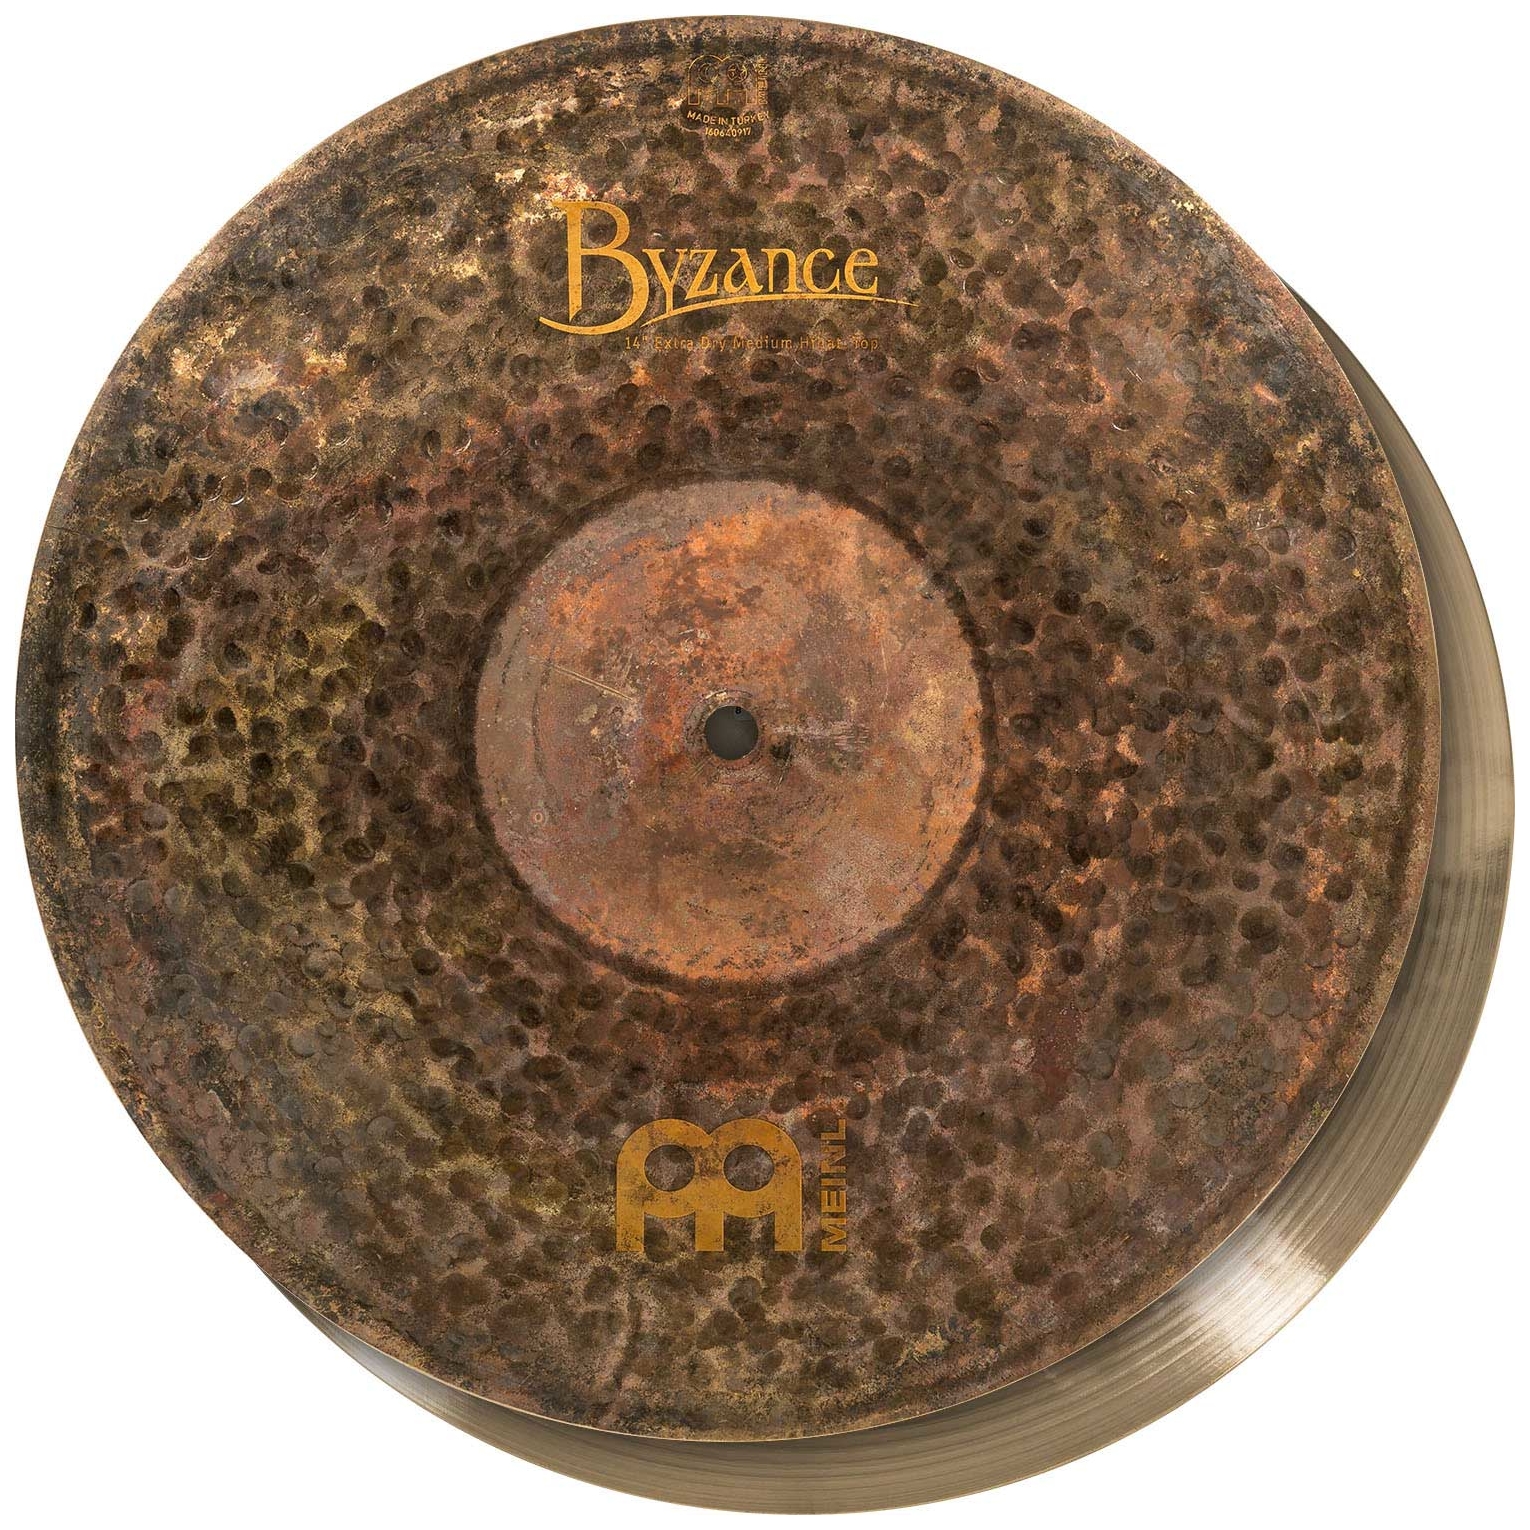 Meinl Cymbals B14EDMH - 14" Byzance Extra Dry Medium Hihat 